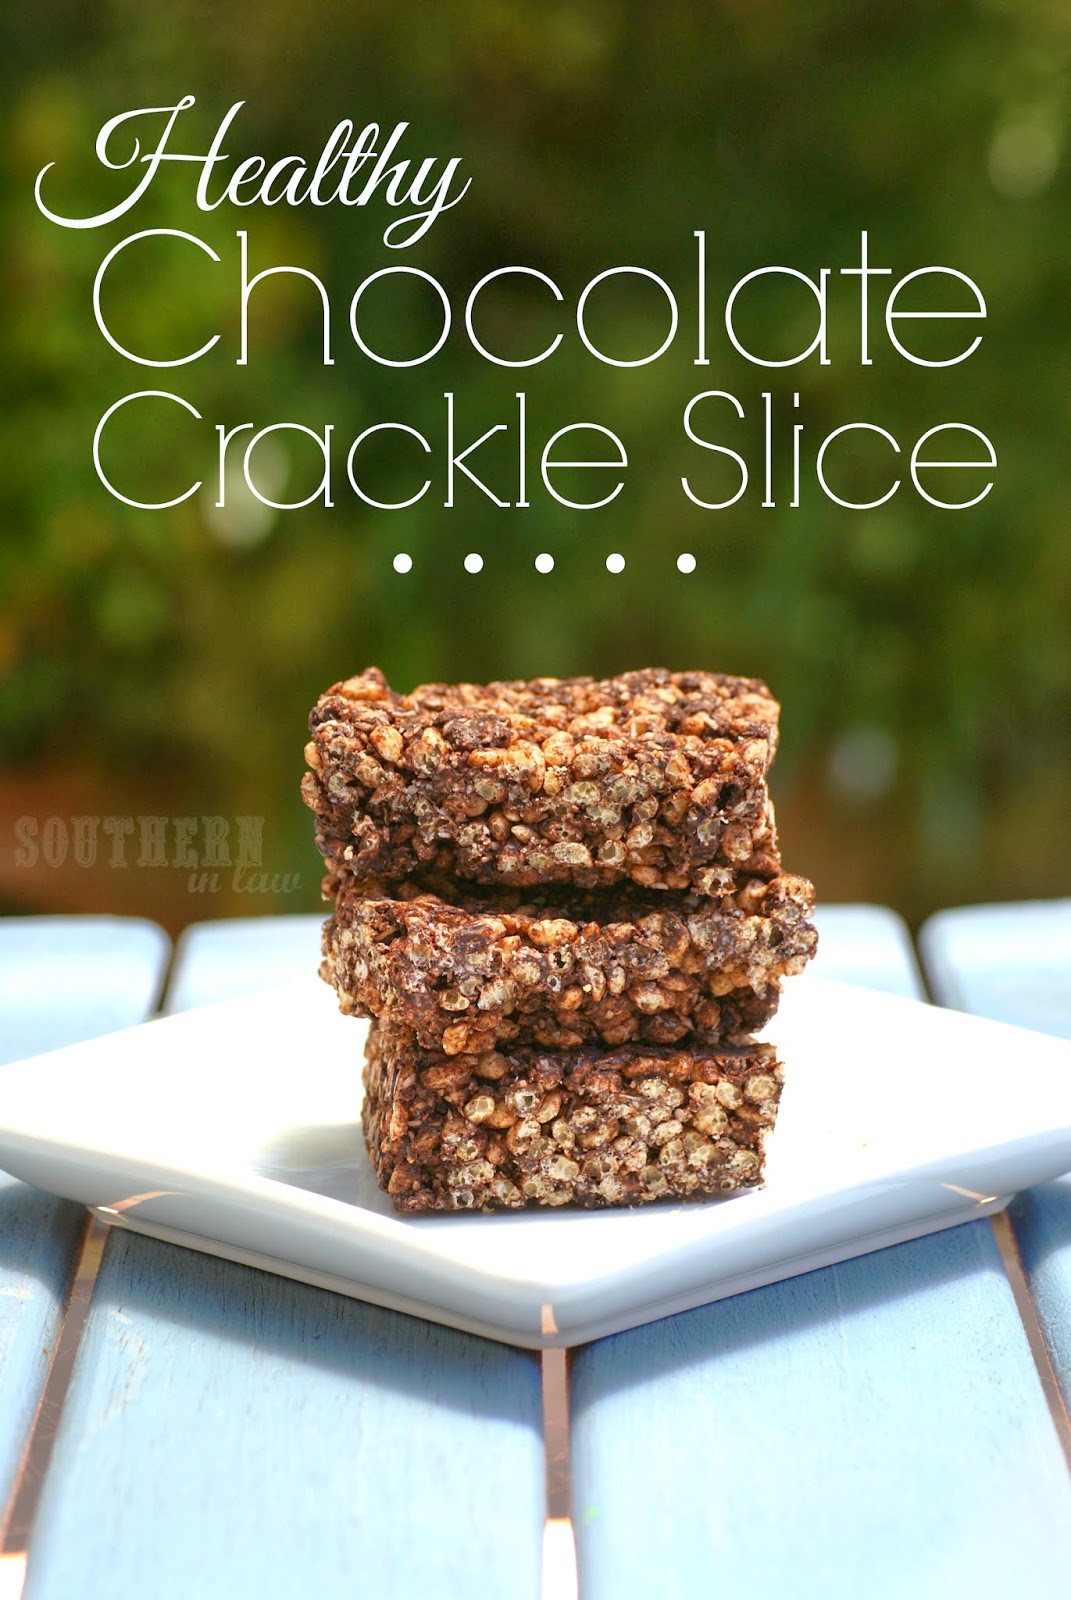 Gluten Free Chocolate Crackle Recipe - Healthy Chocolate Coconut Rice Crispy Treats